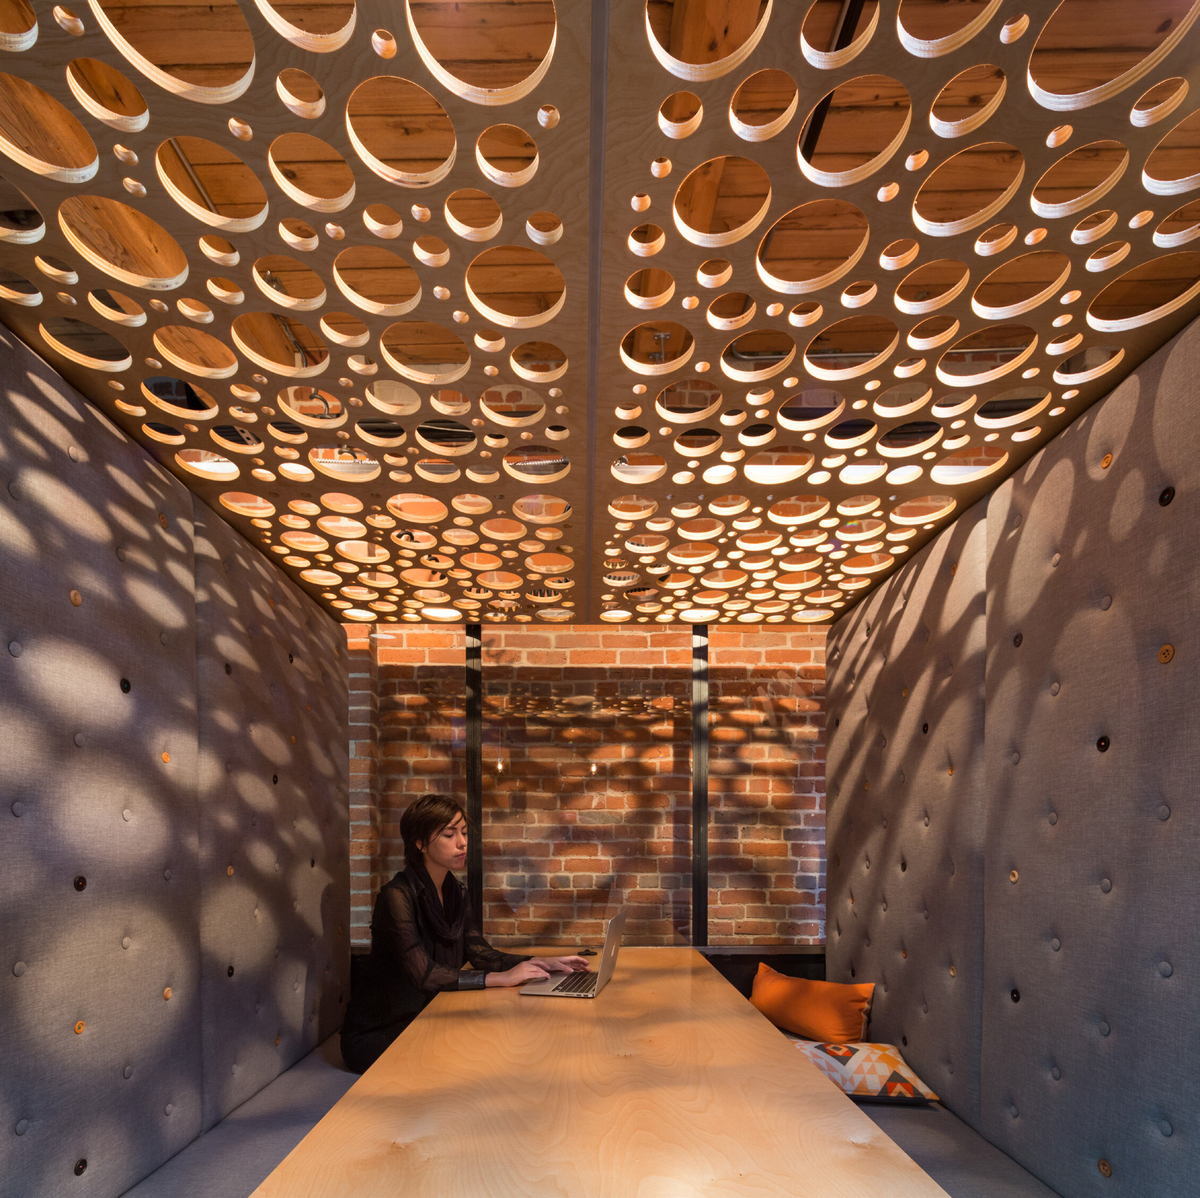 Slack总部的日间内部视图，显示了有百年历史的木材柱和梁结构，在胶合板假天花板上有无数的孔